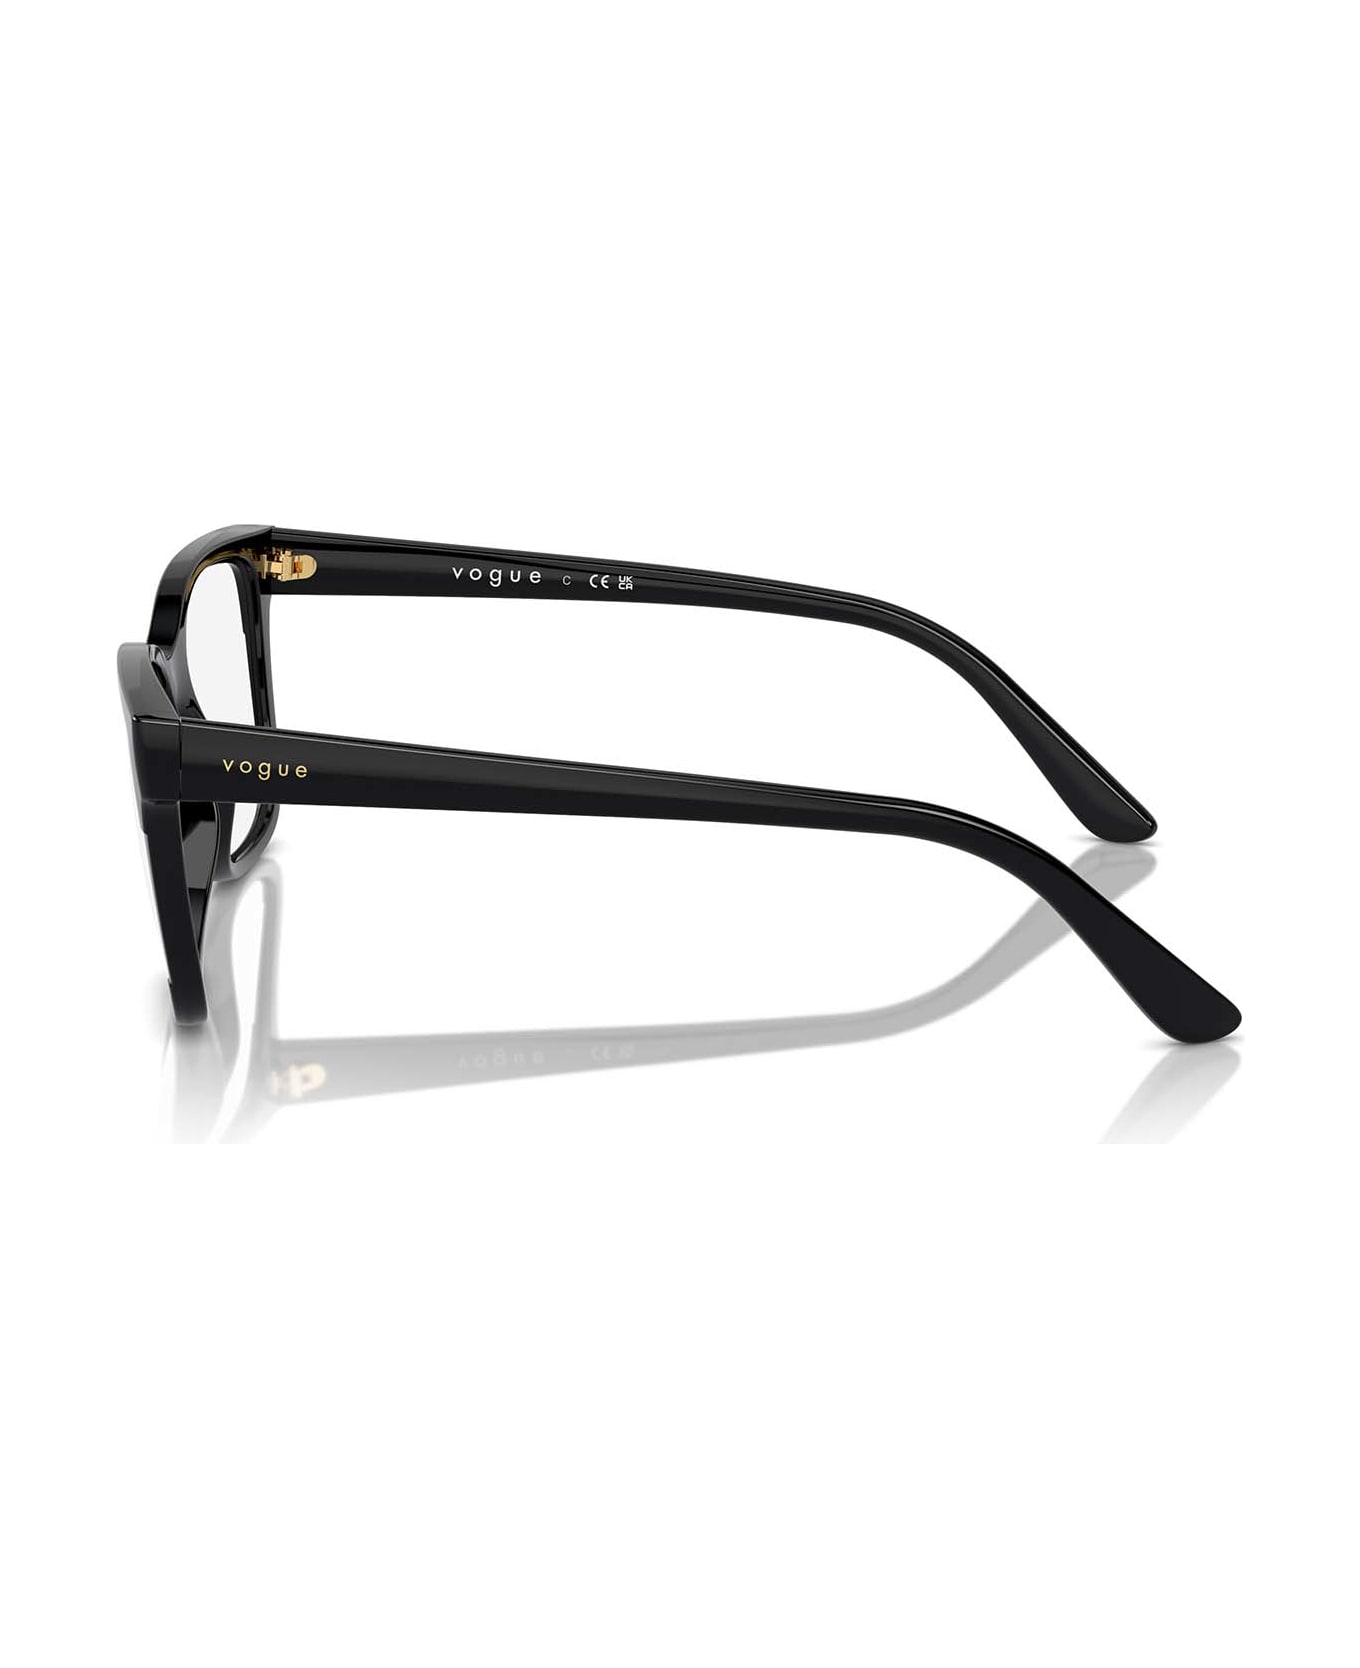 Vogue Eyewear Vo5556 Black Glasses - Black